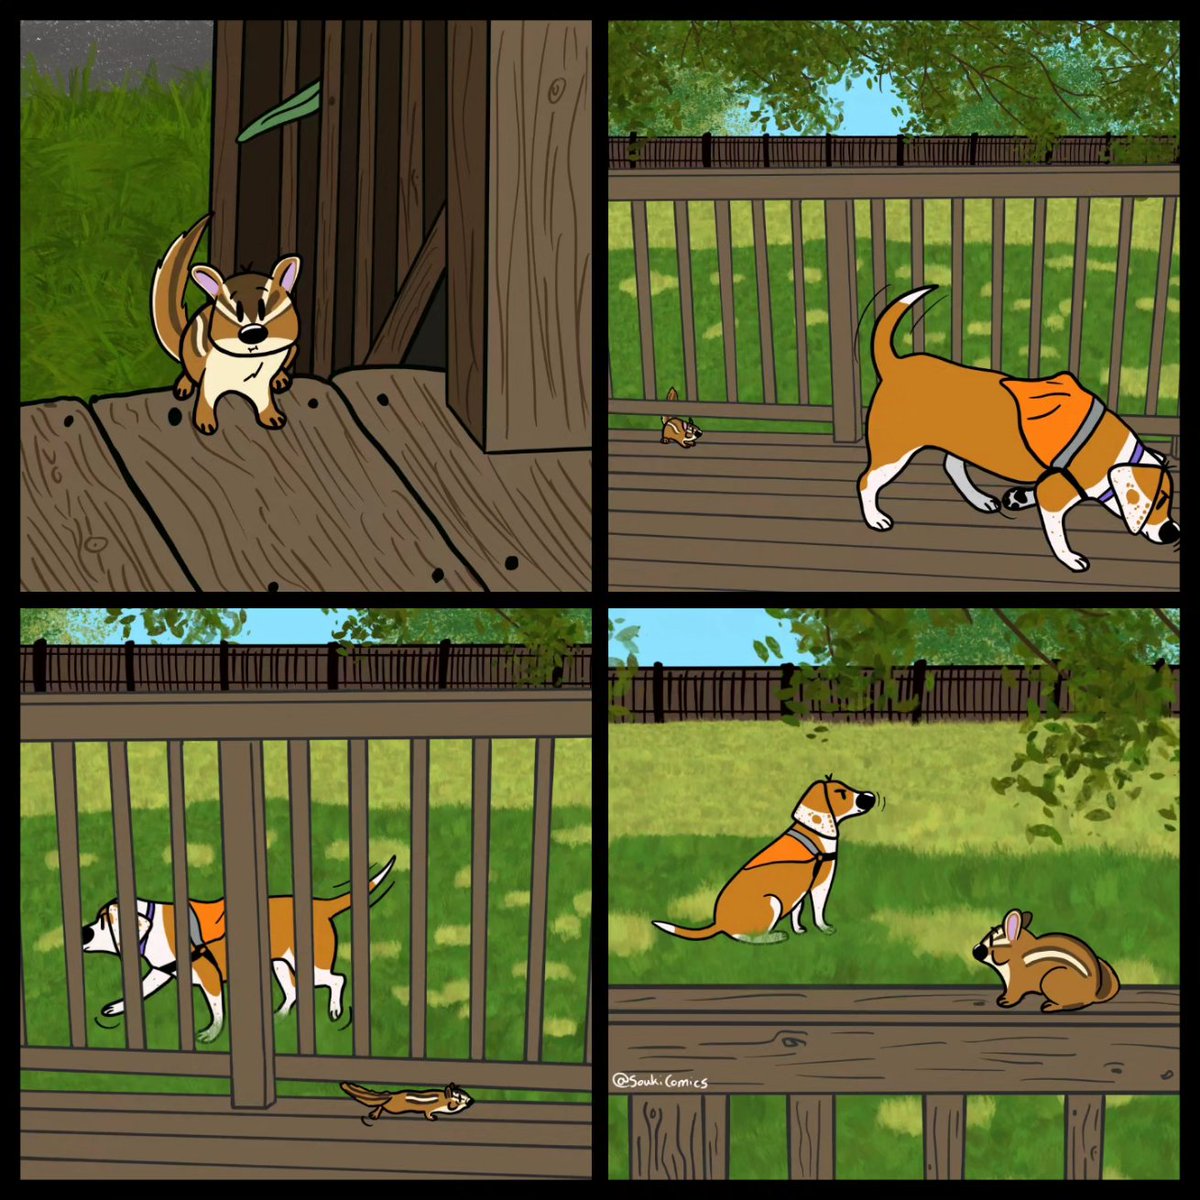 Clueless 🐿️ 

#dogcomics #webcomics #cutecomics #cutedog #chipmunk #backyard #backyardkingdom #porch #huntingdog #hunting #hounddog #puppydog #doggo #sneaky #comics #beabull #beaglemix #digitalart #shinanigans #summer #clueless